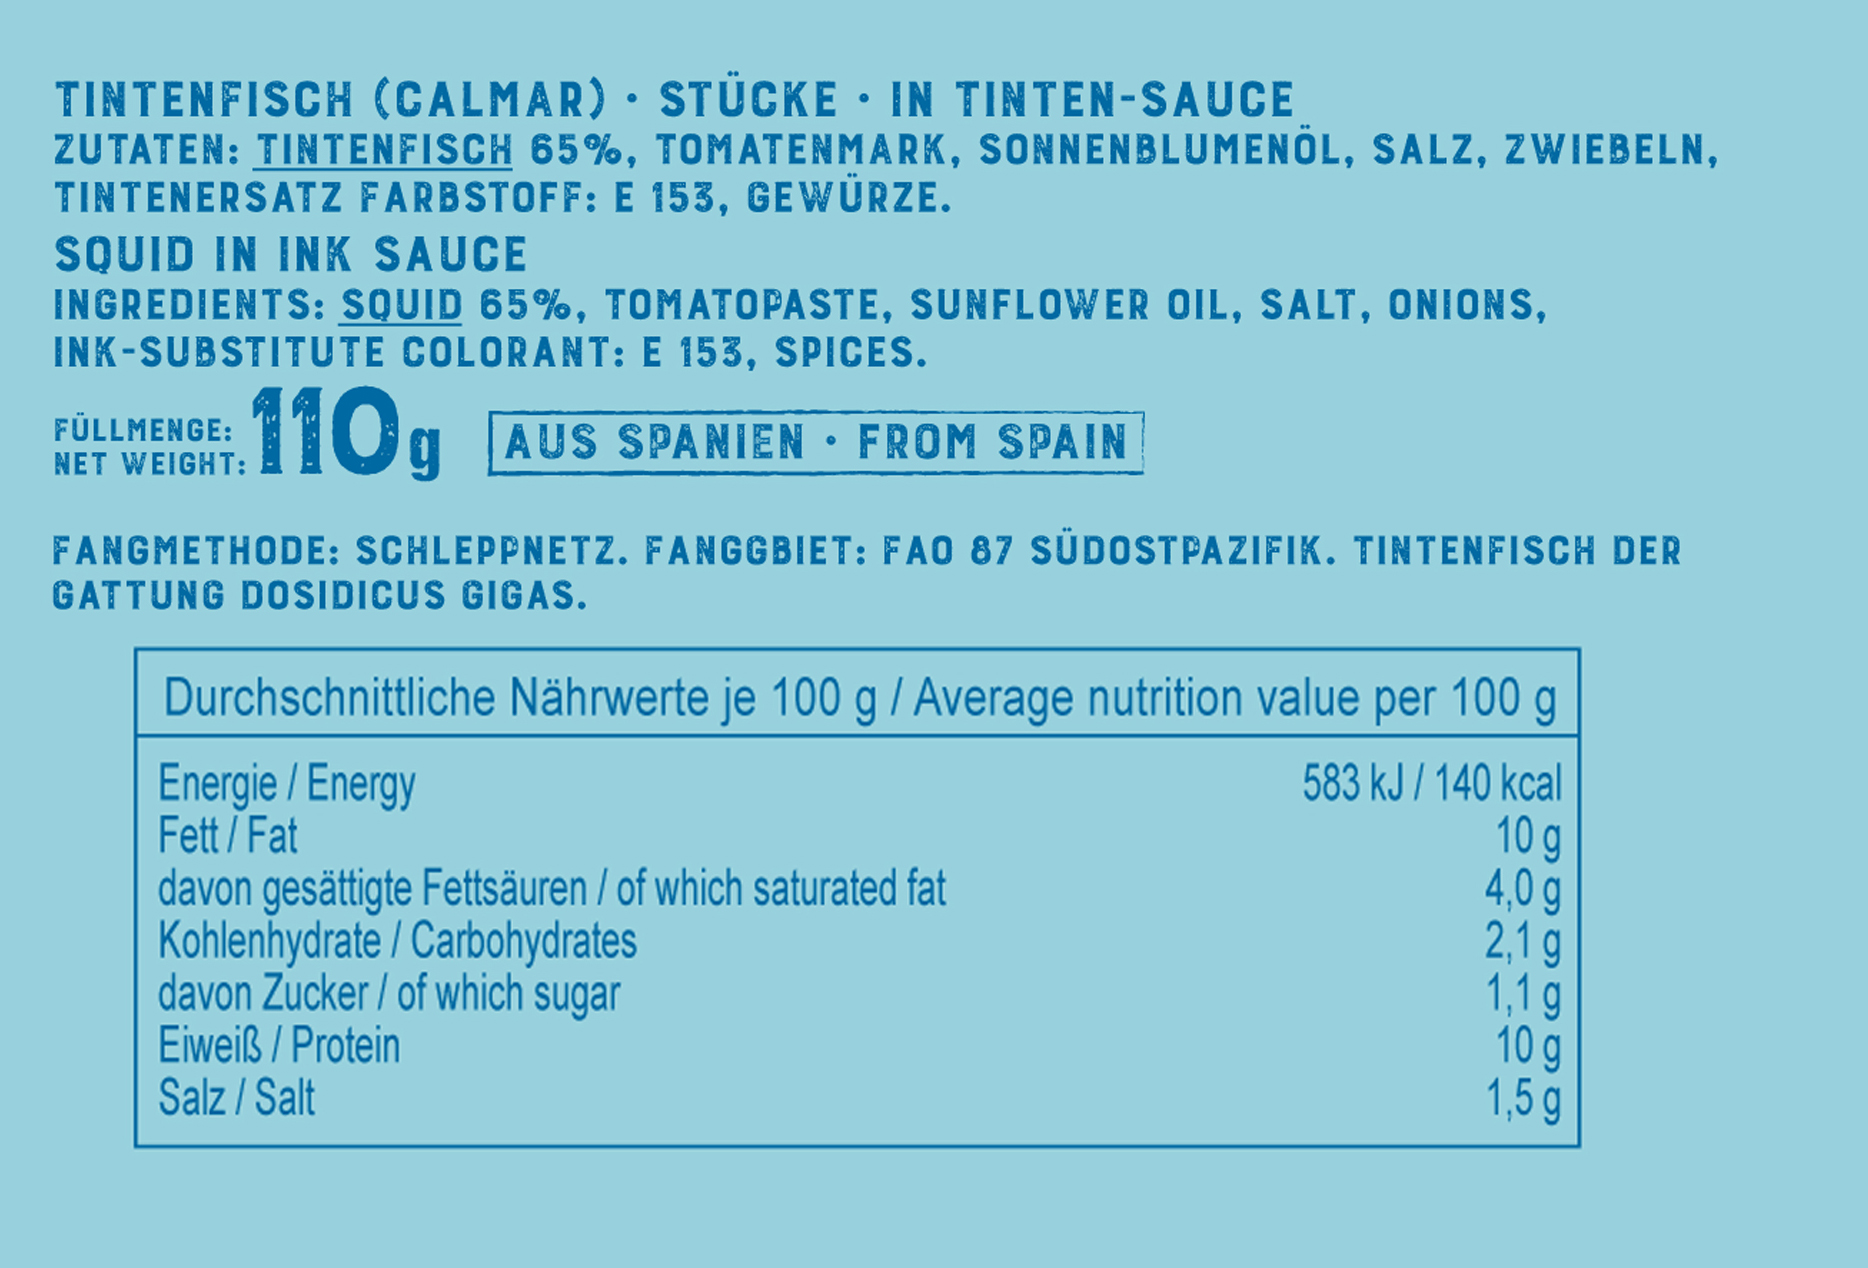 Calmar in würziger Tinten-Sauce, 110 g